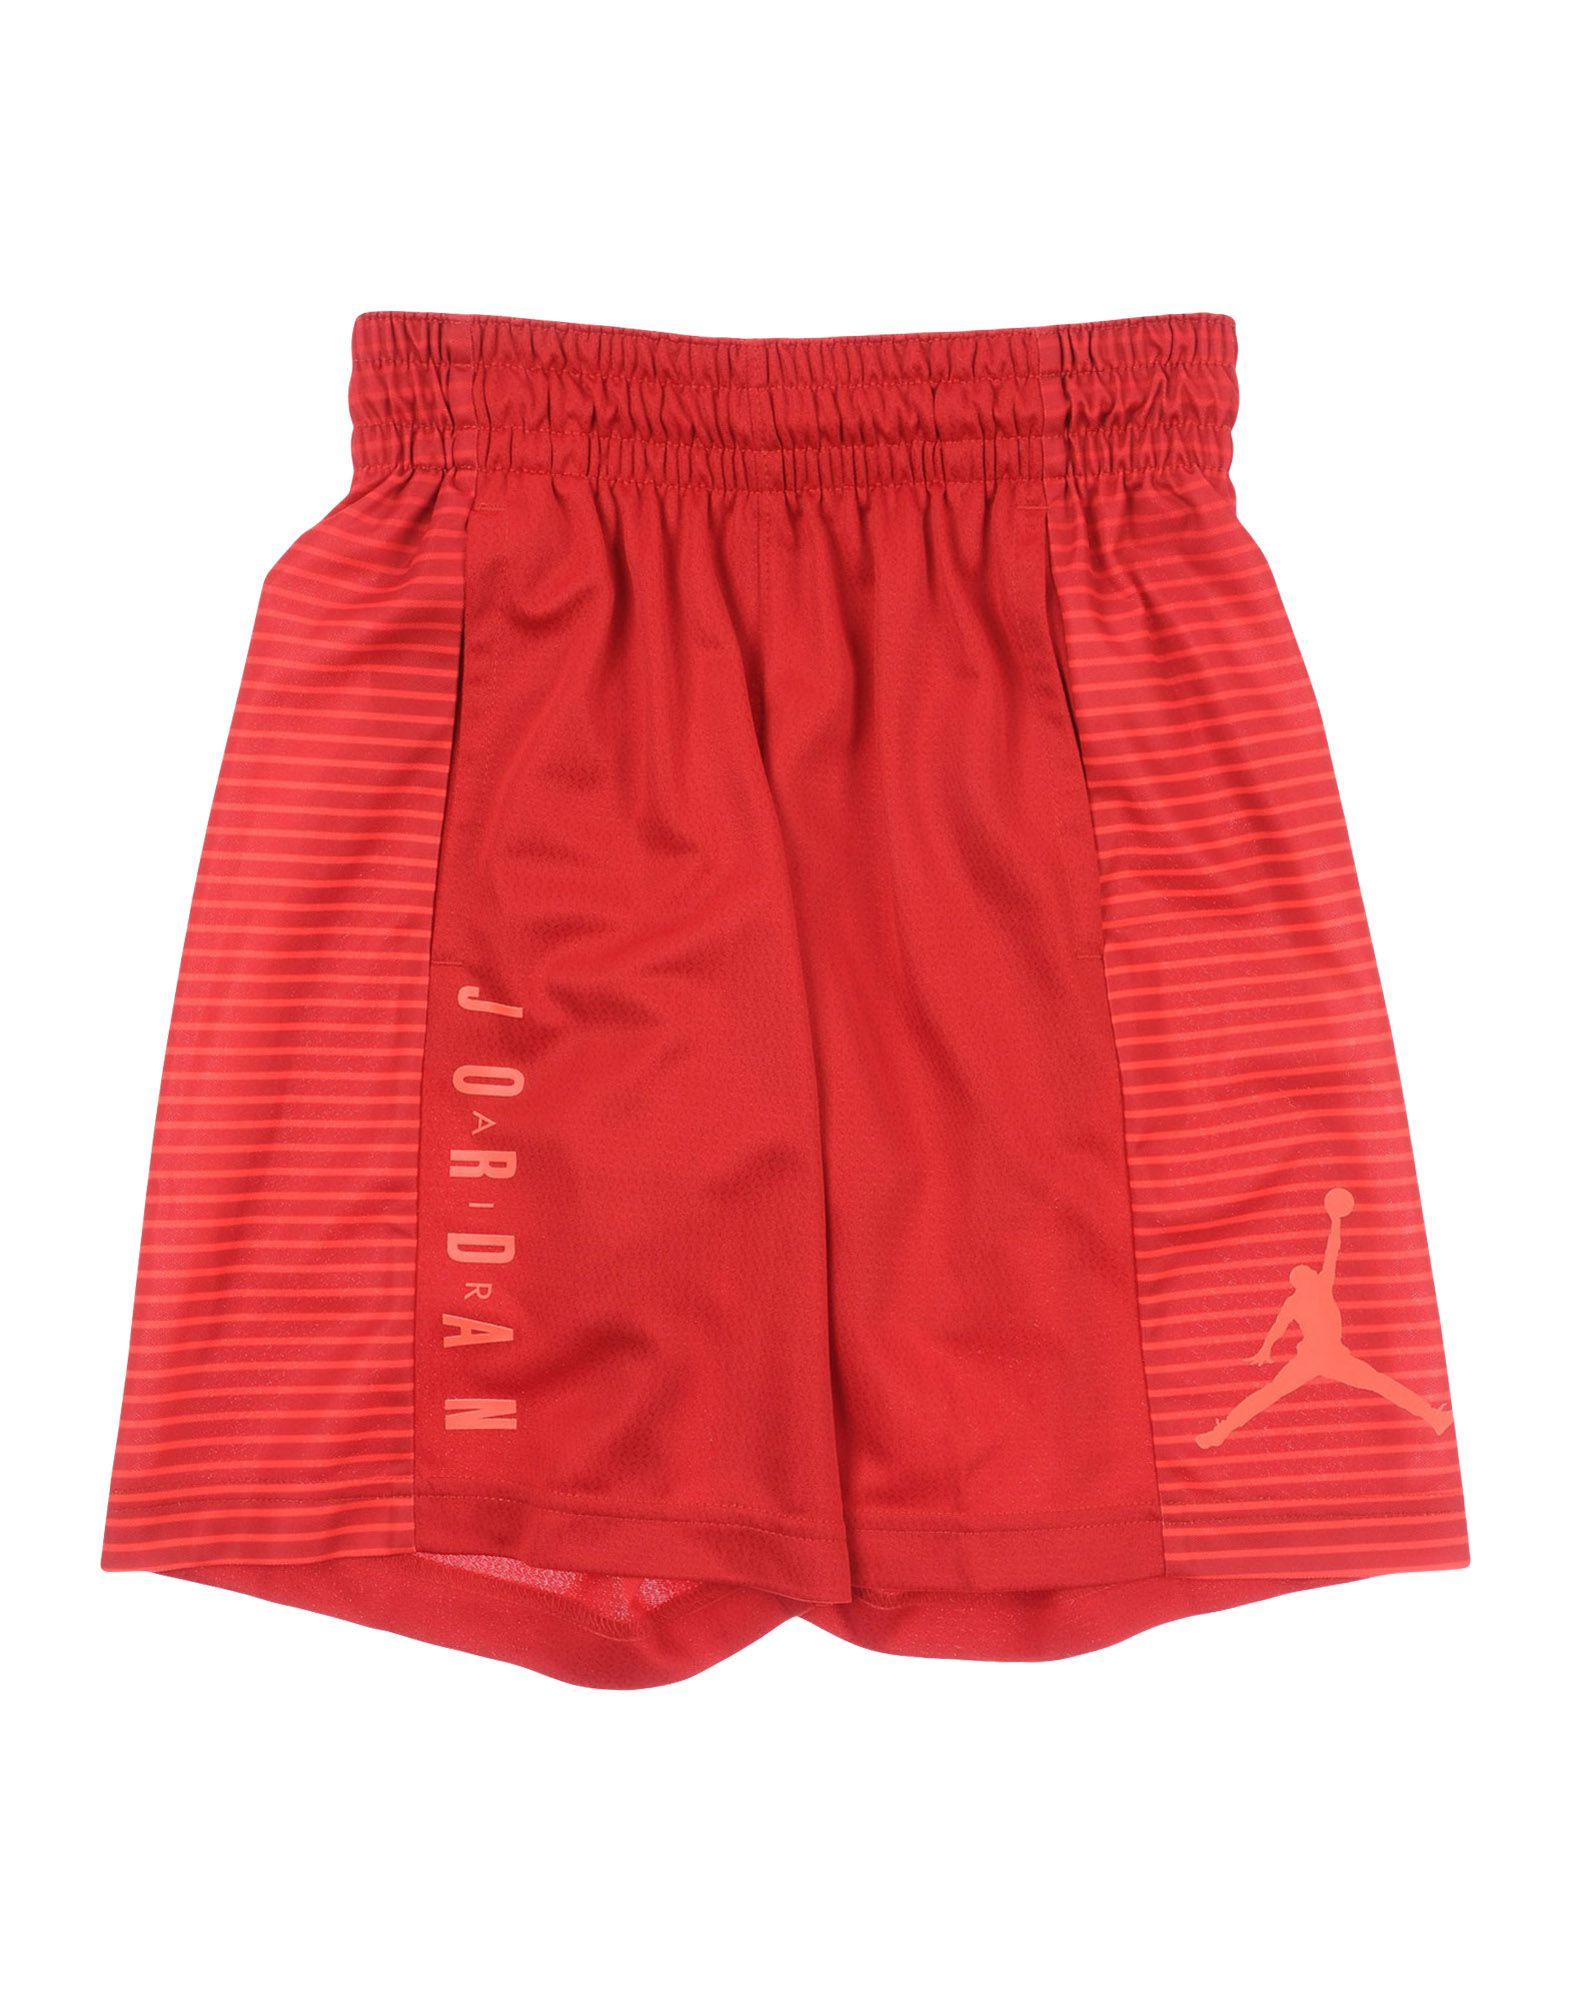 buy jordan shorts online